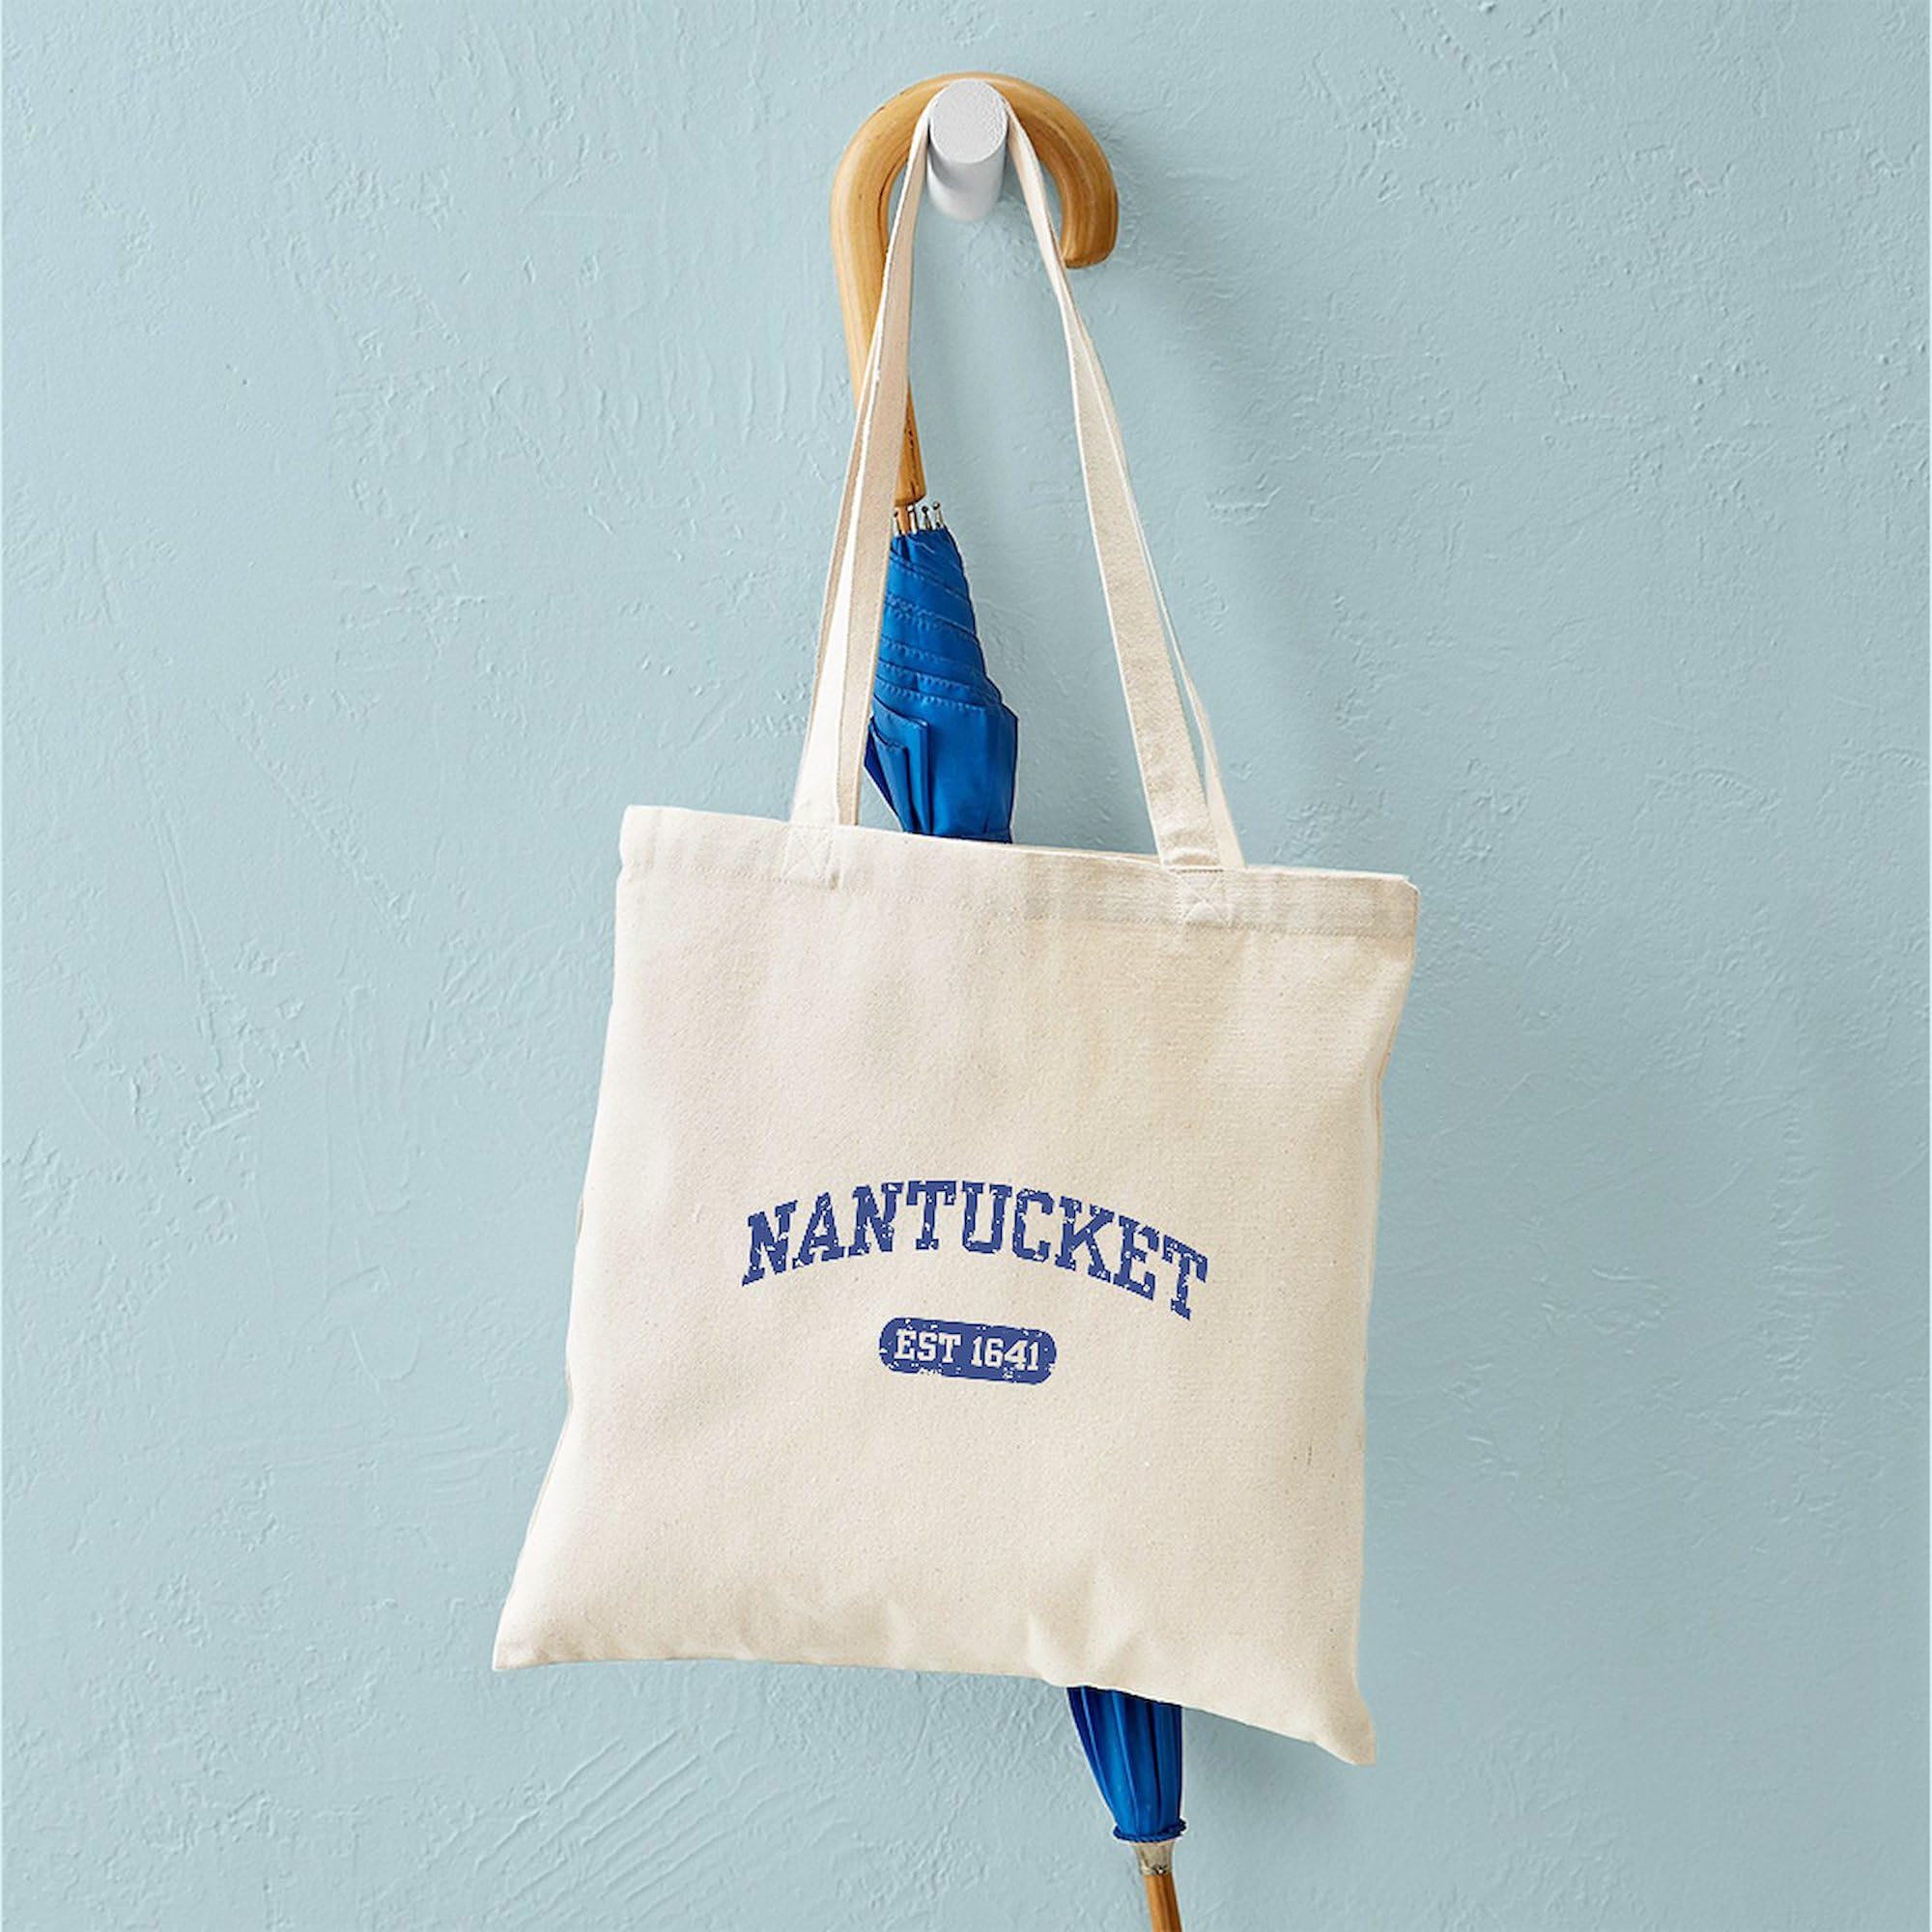 CafePress Nantucket EST 1641 Tote Bag Canvas Tote Shopping Bag